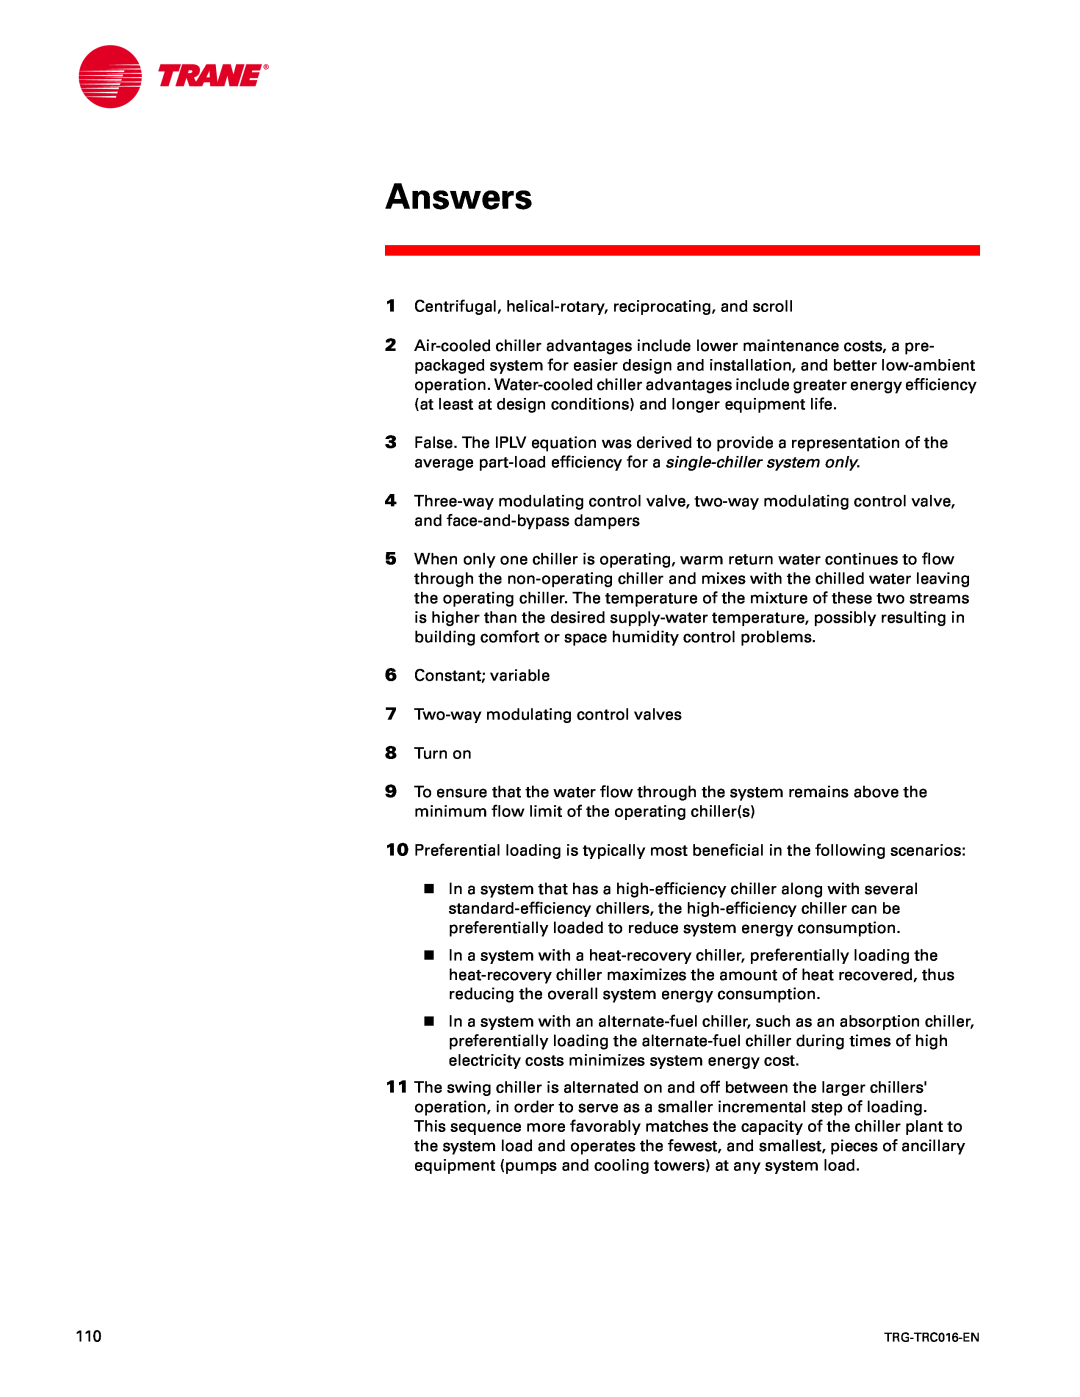 Trane TRG-TRC016-EN manual Answers 